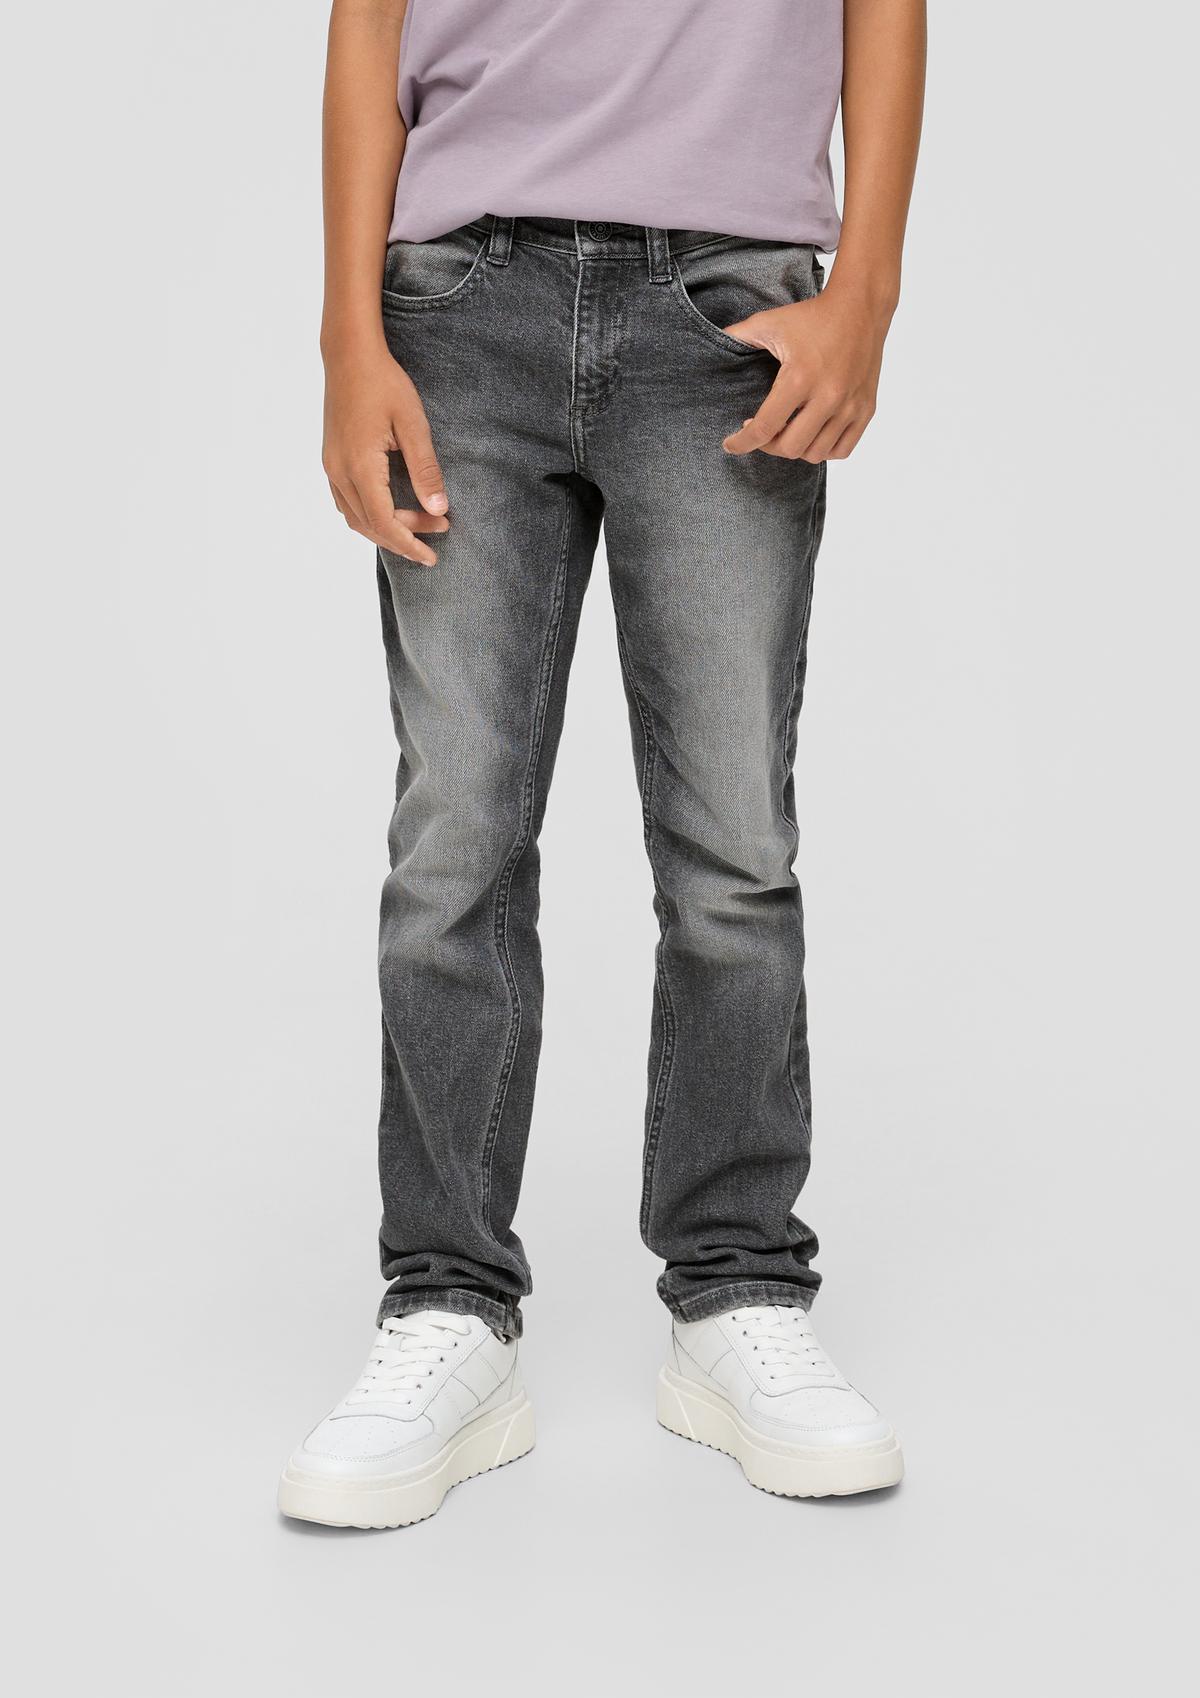 Seattle jeans / regular fit / mid rise / slim leg